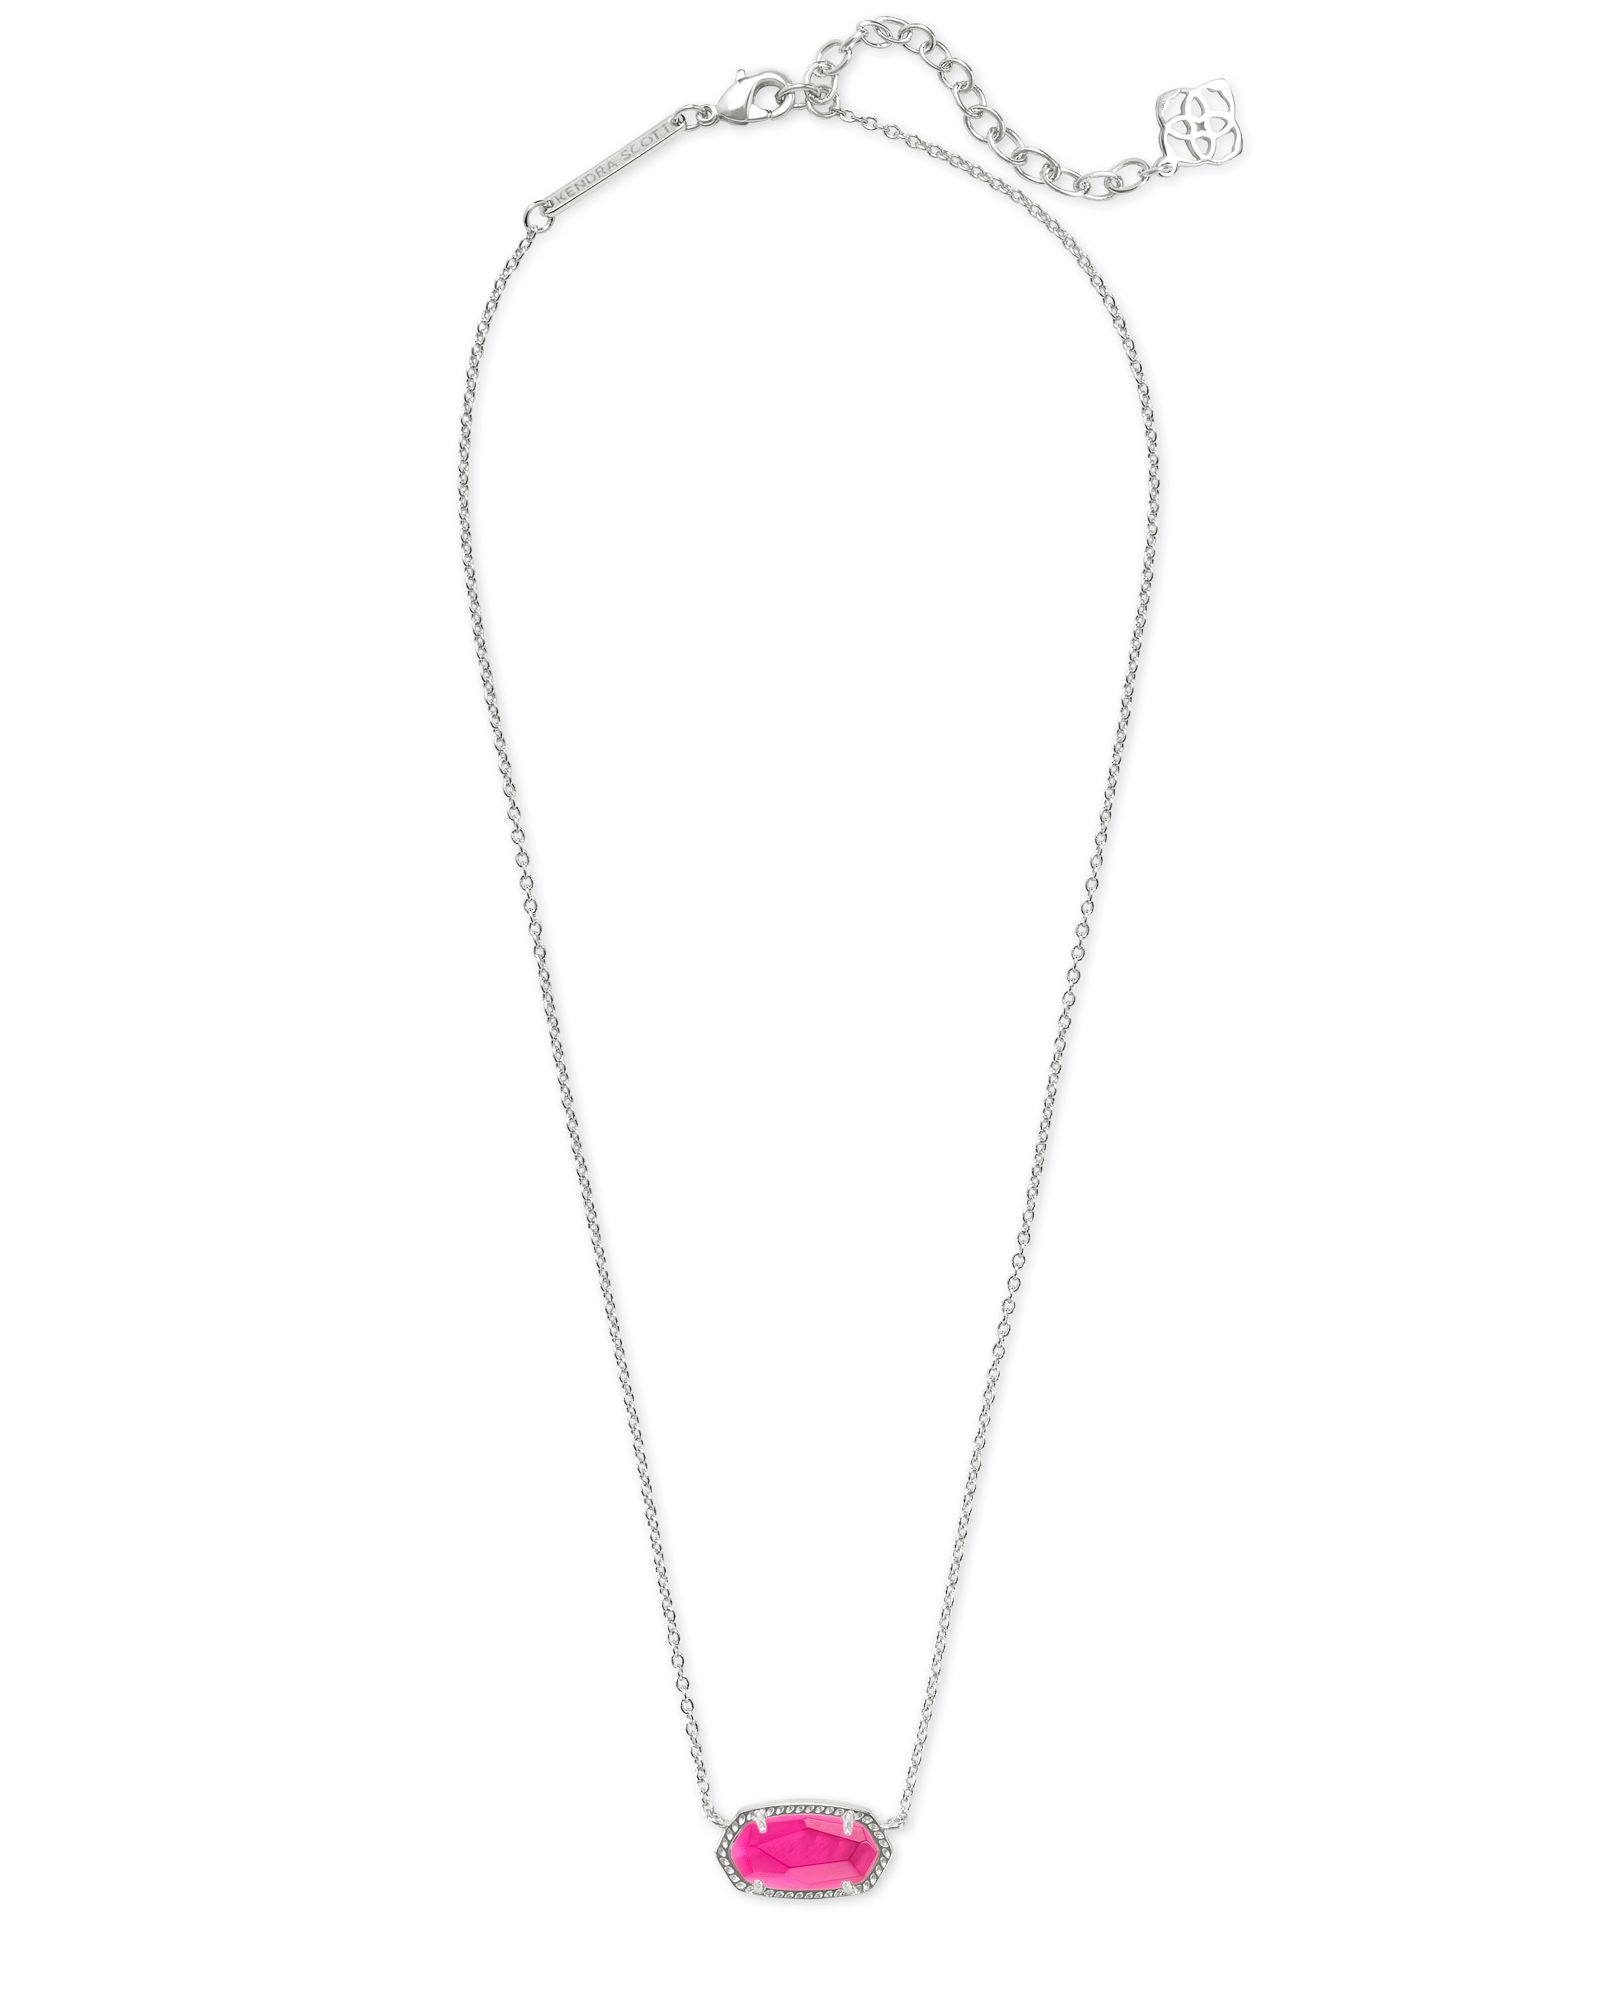 Kendra Scott | Elisa Silver Pendant Necklace in Azalea Illusion - Giddy Up Glamour Boutique